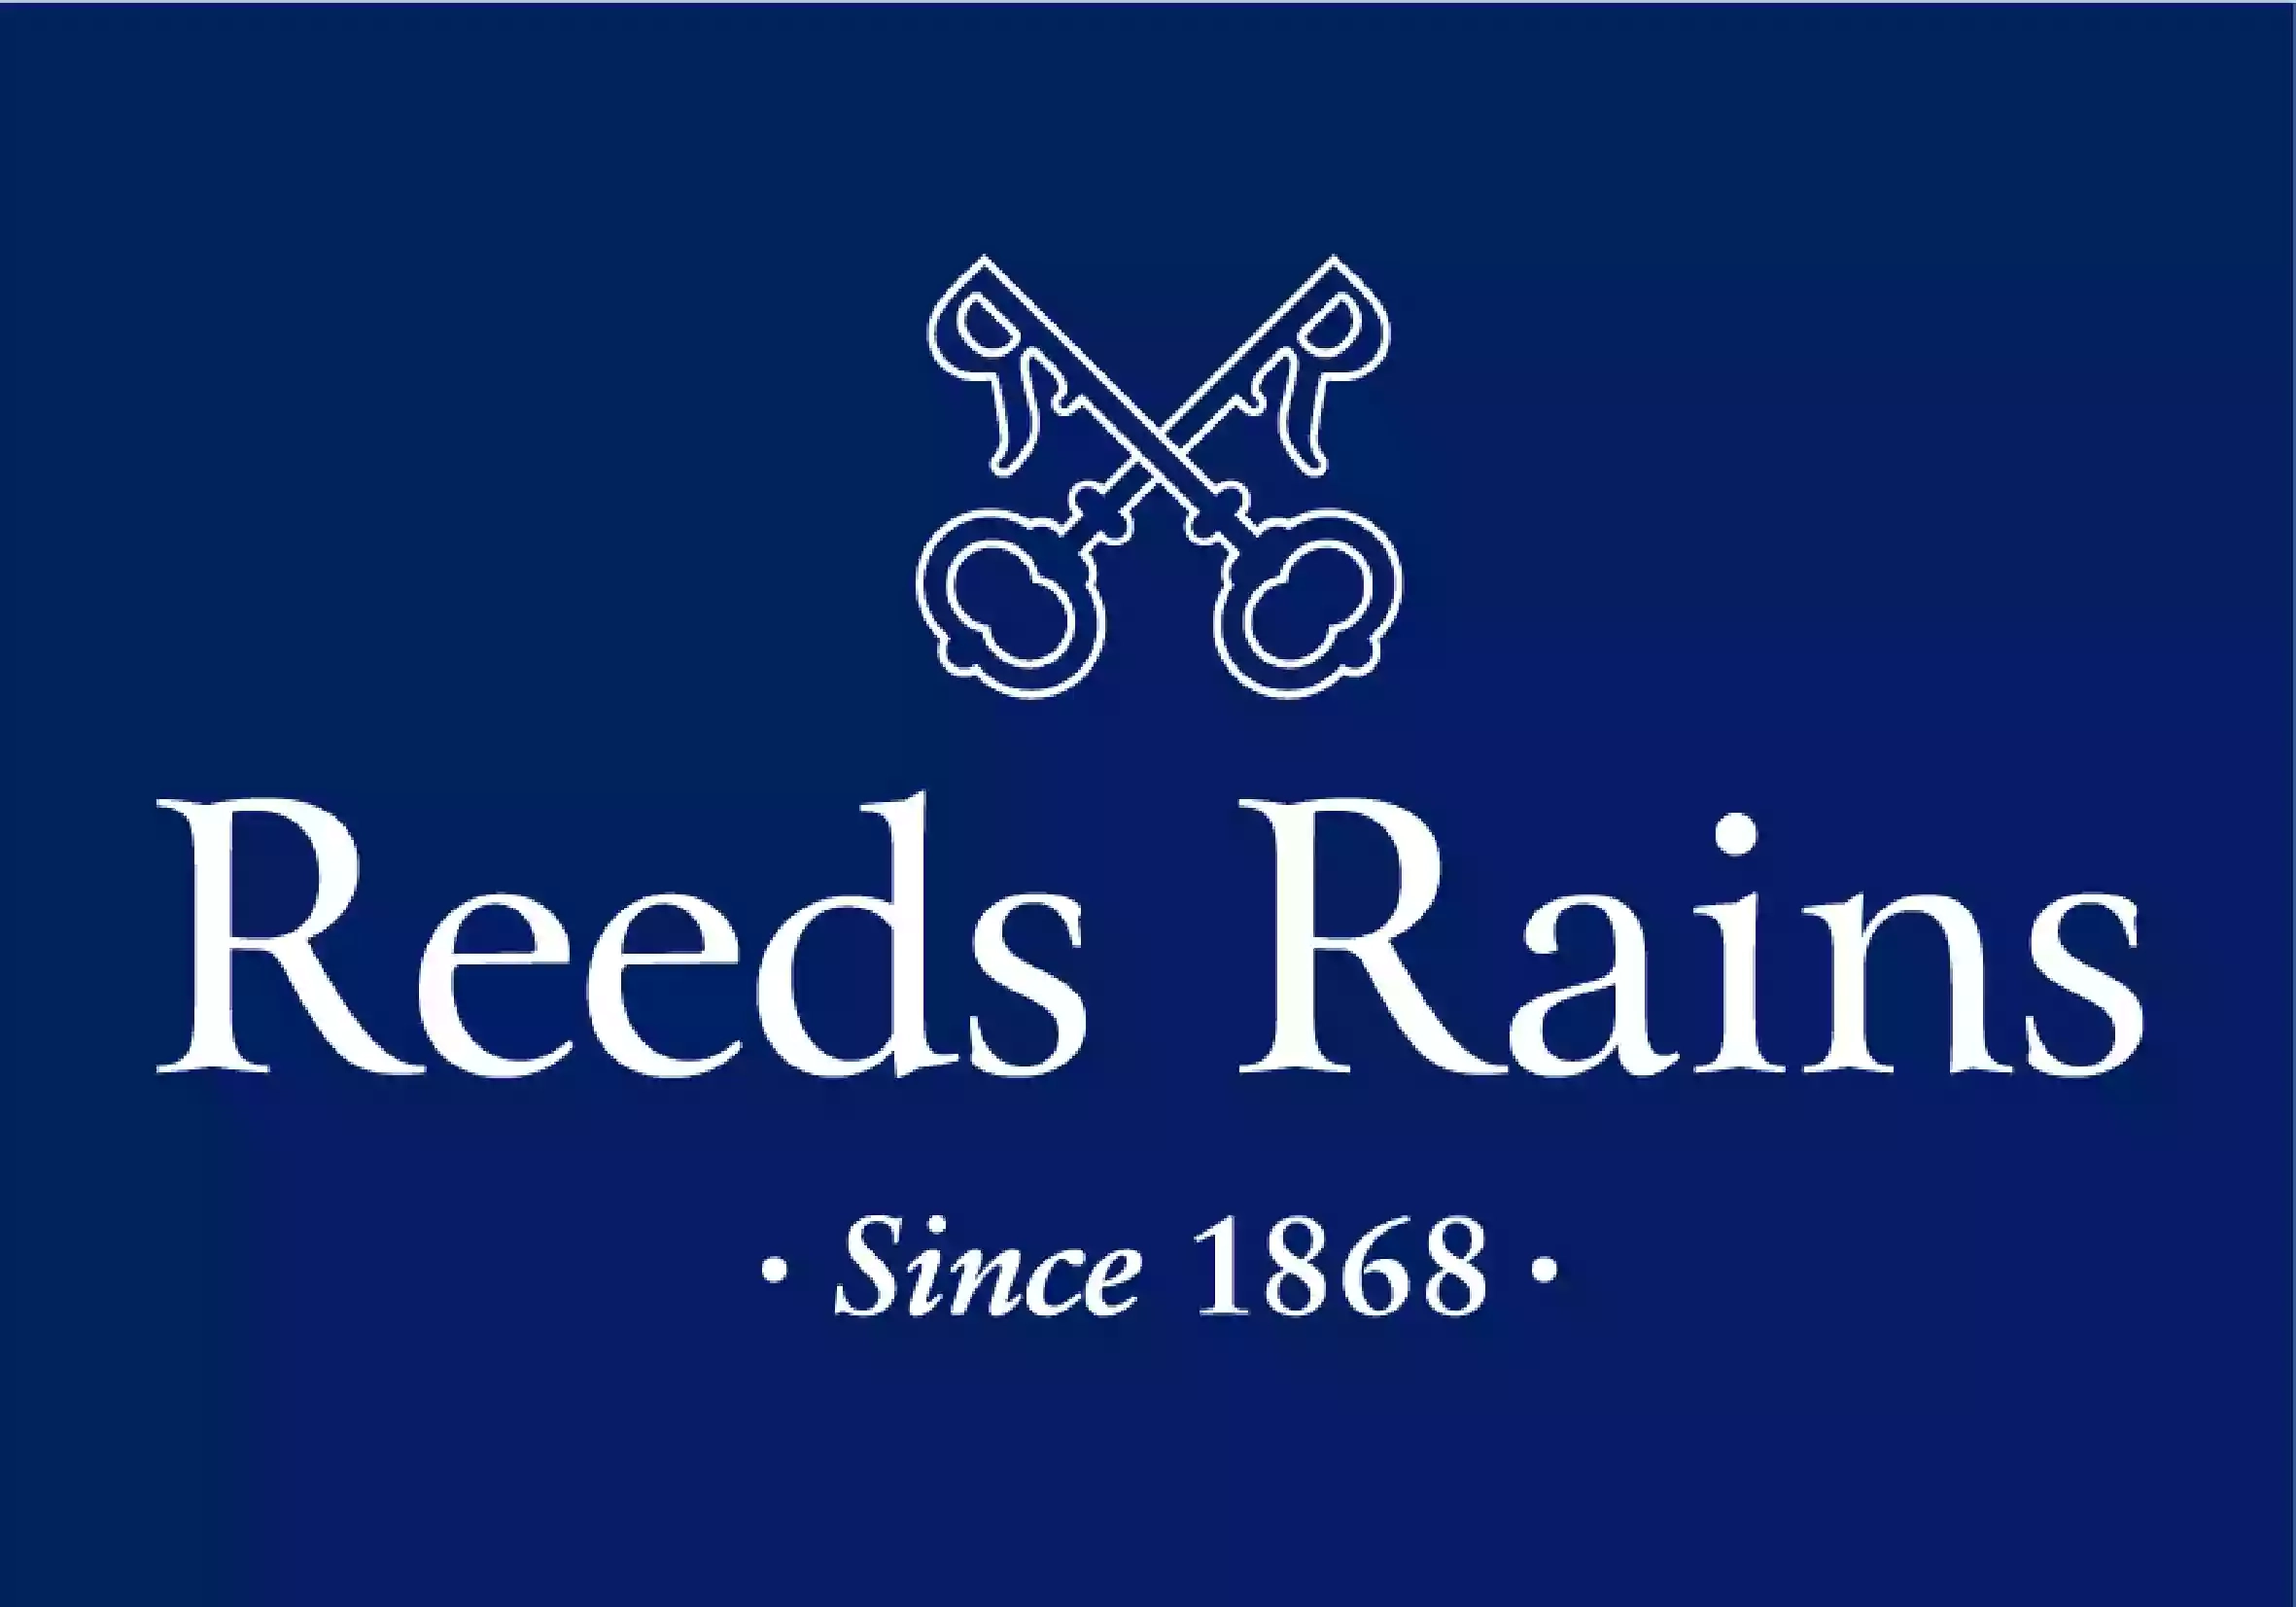 Reeds Rains Estate Agents Ballyhackamore